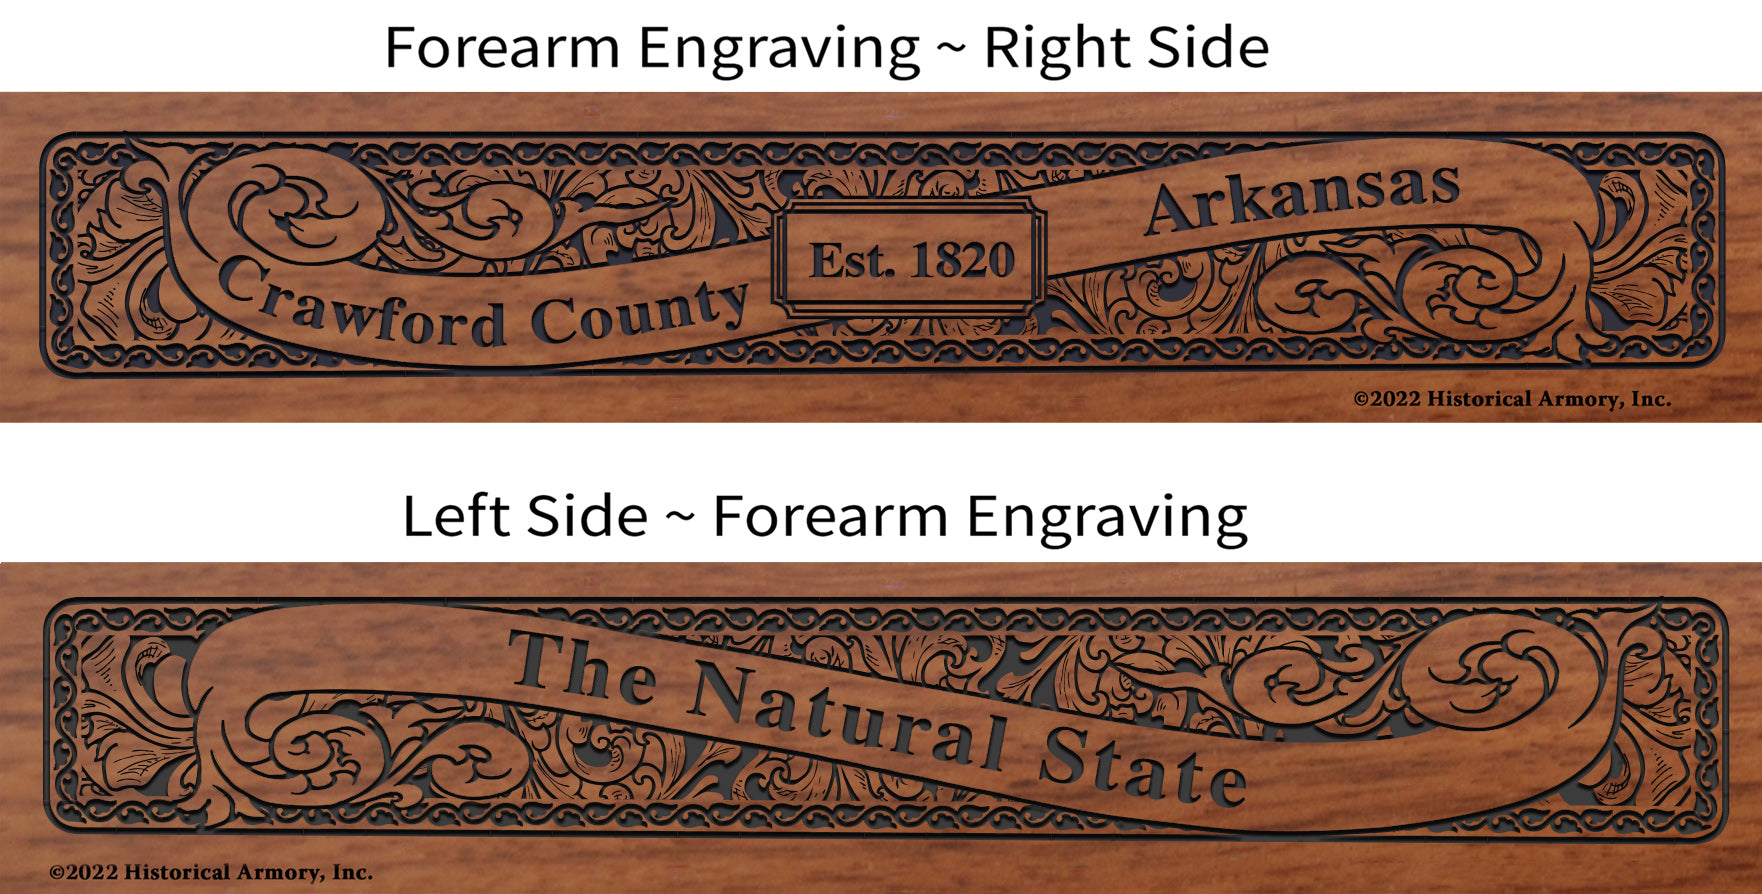 Crawford County Arkansas Engraved Rifle Forearm